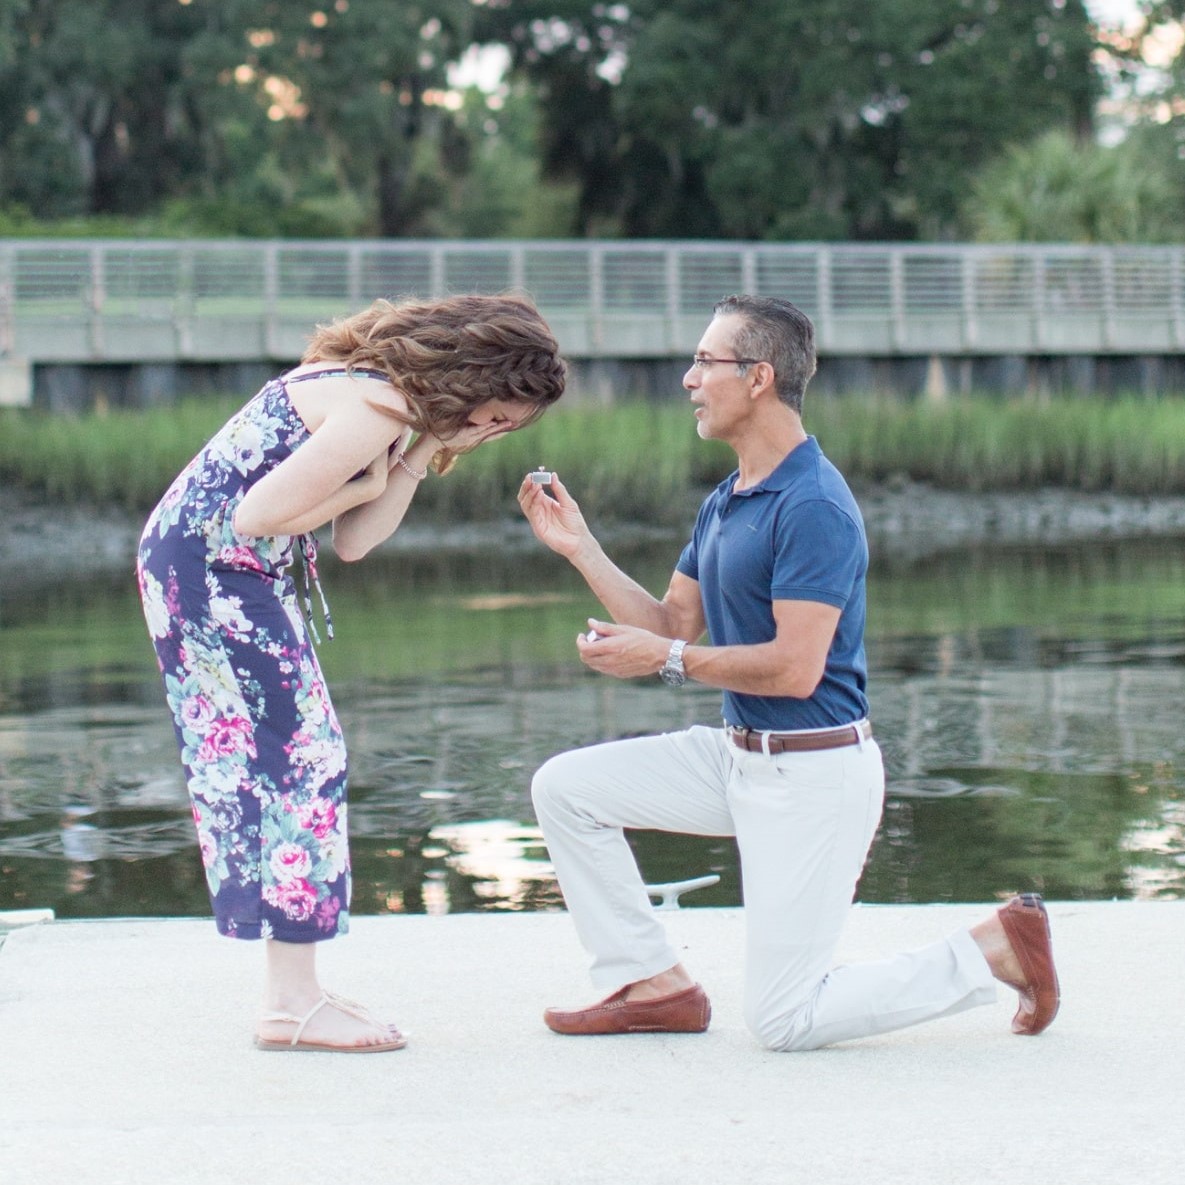 Charleston Proposal | South Carolina | Proposal Photographers | Laura & Rachel Photography